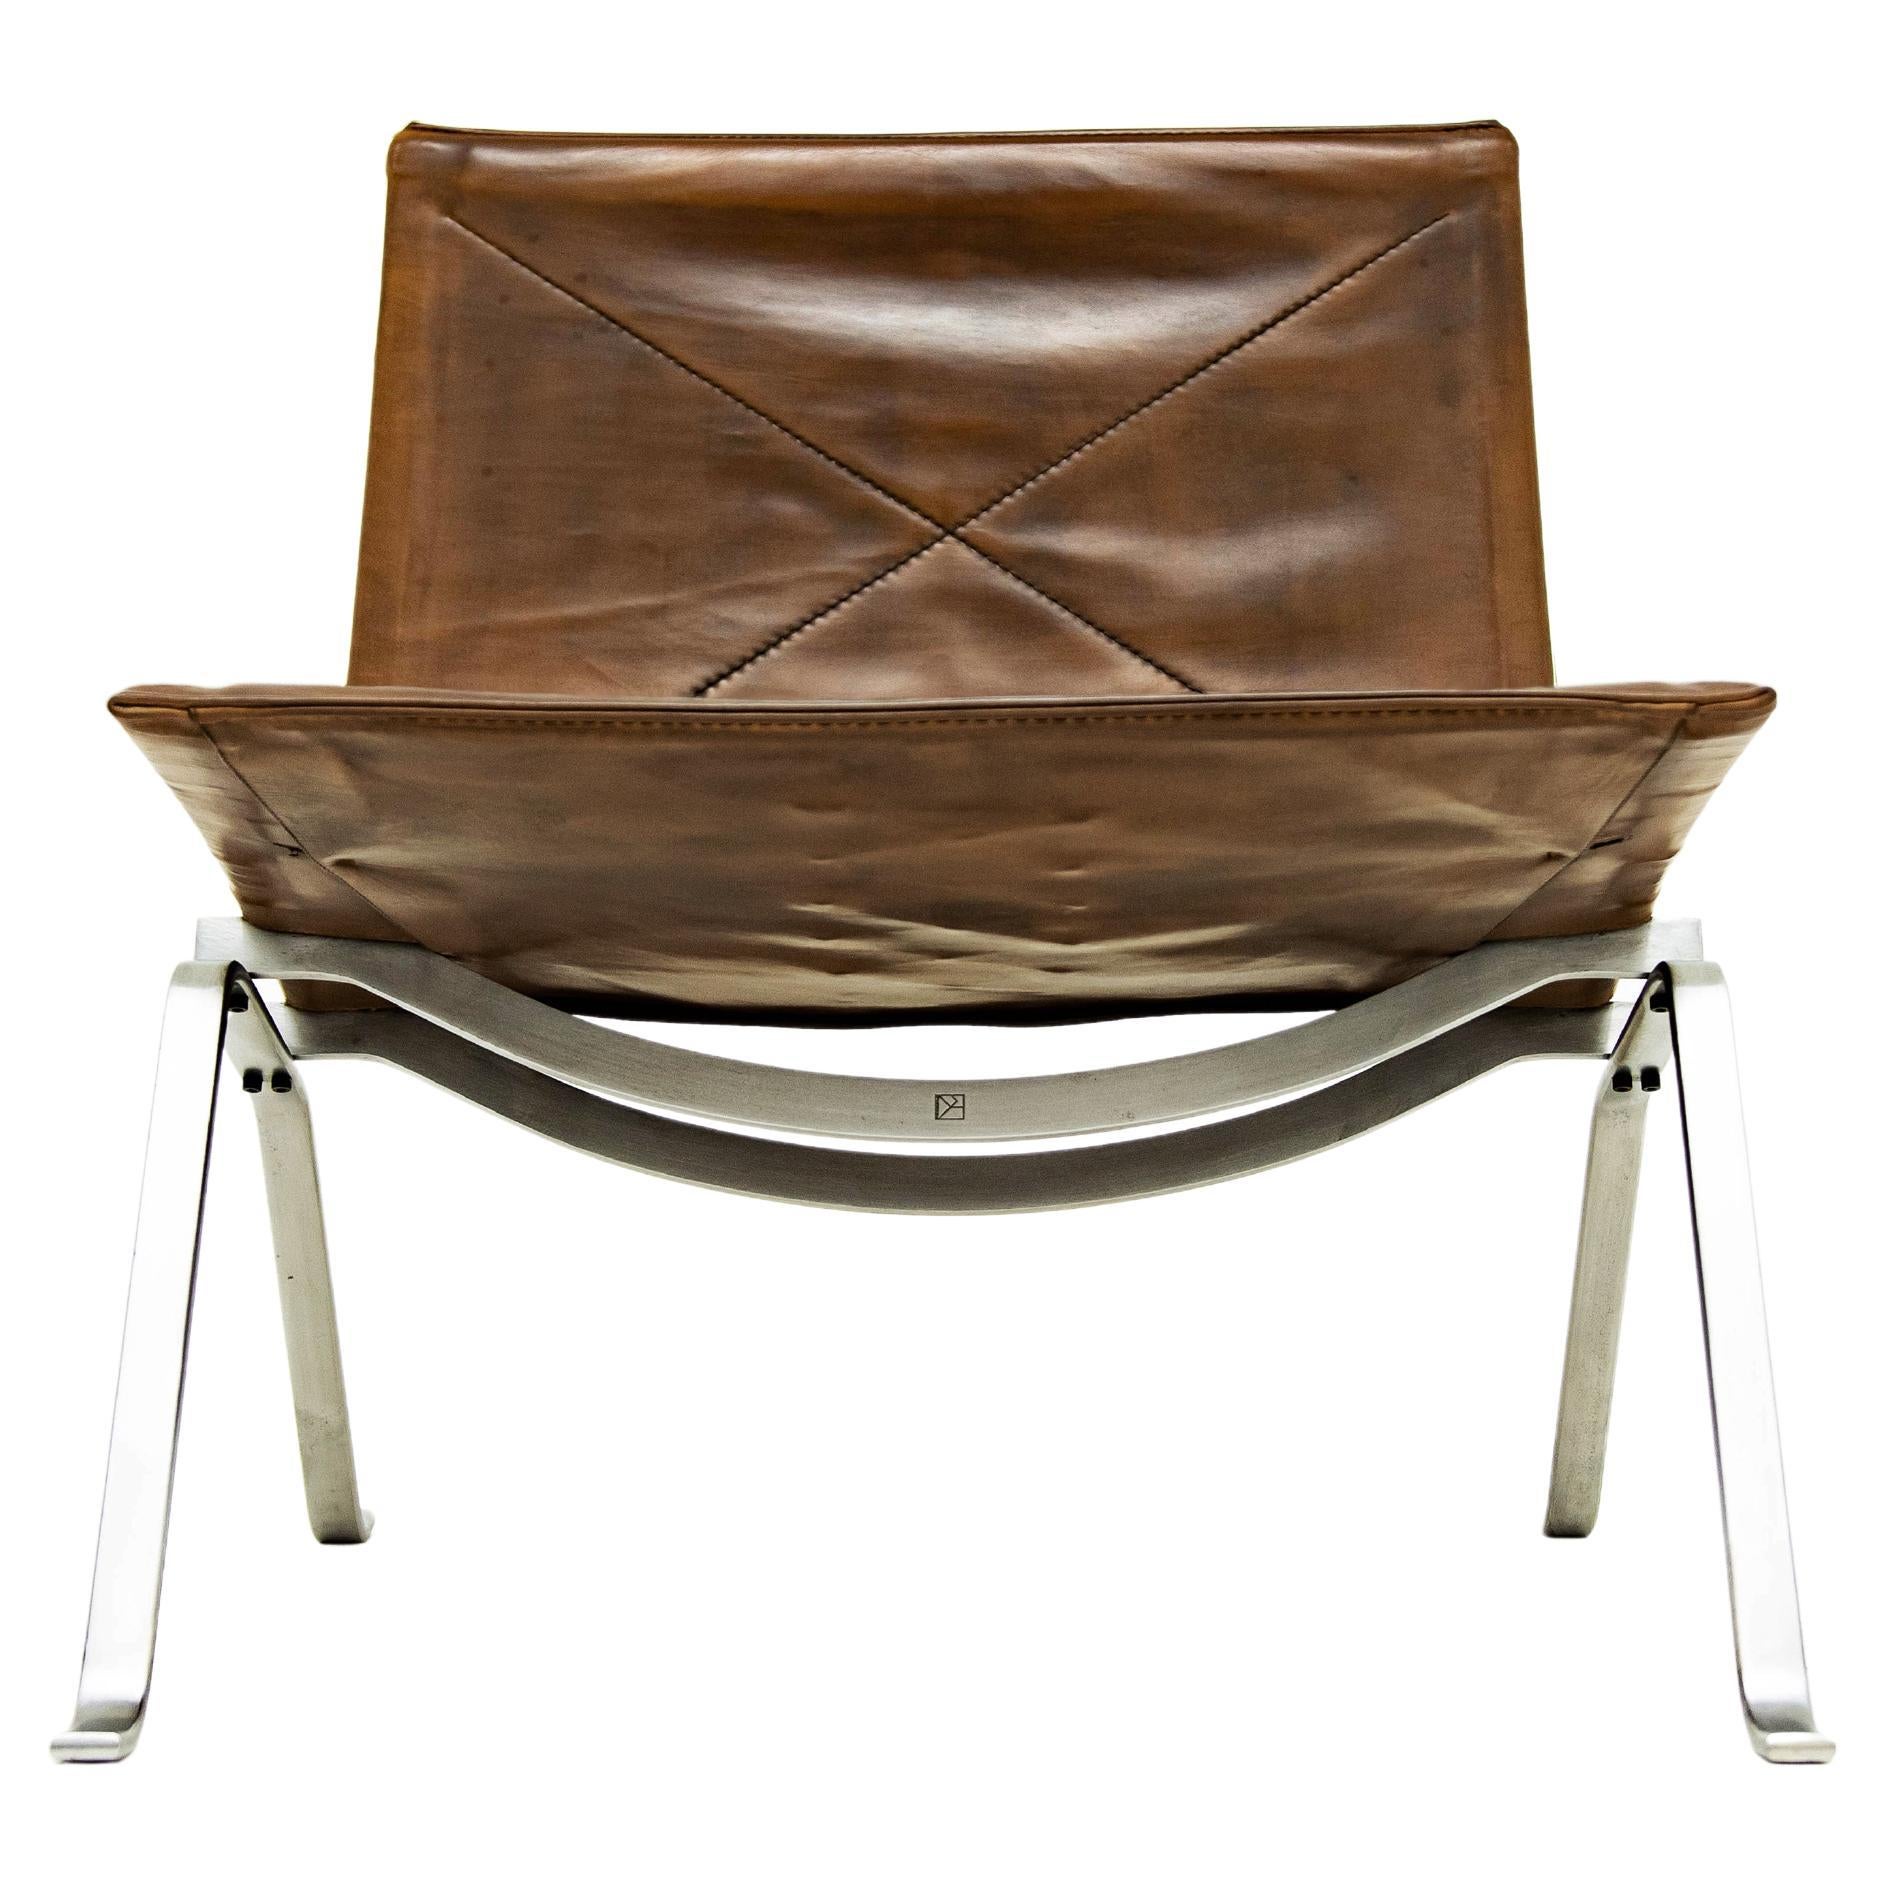 Poul Kjaerholm PK22 Lounge chair in Cognac leather for E. Kold Christensen